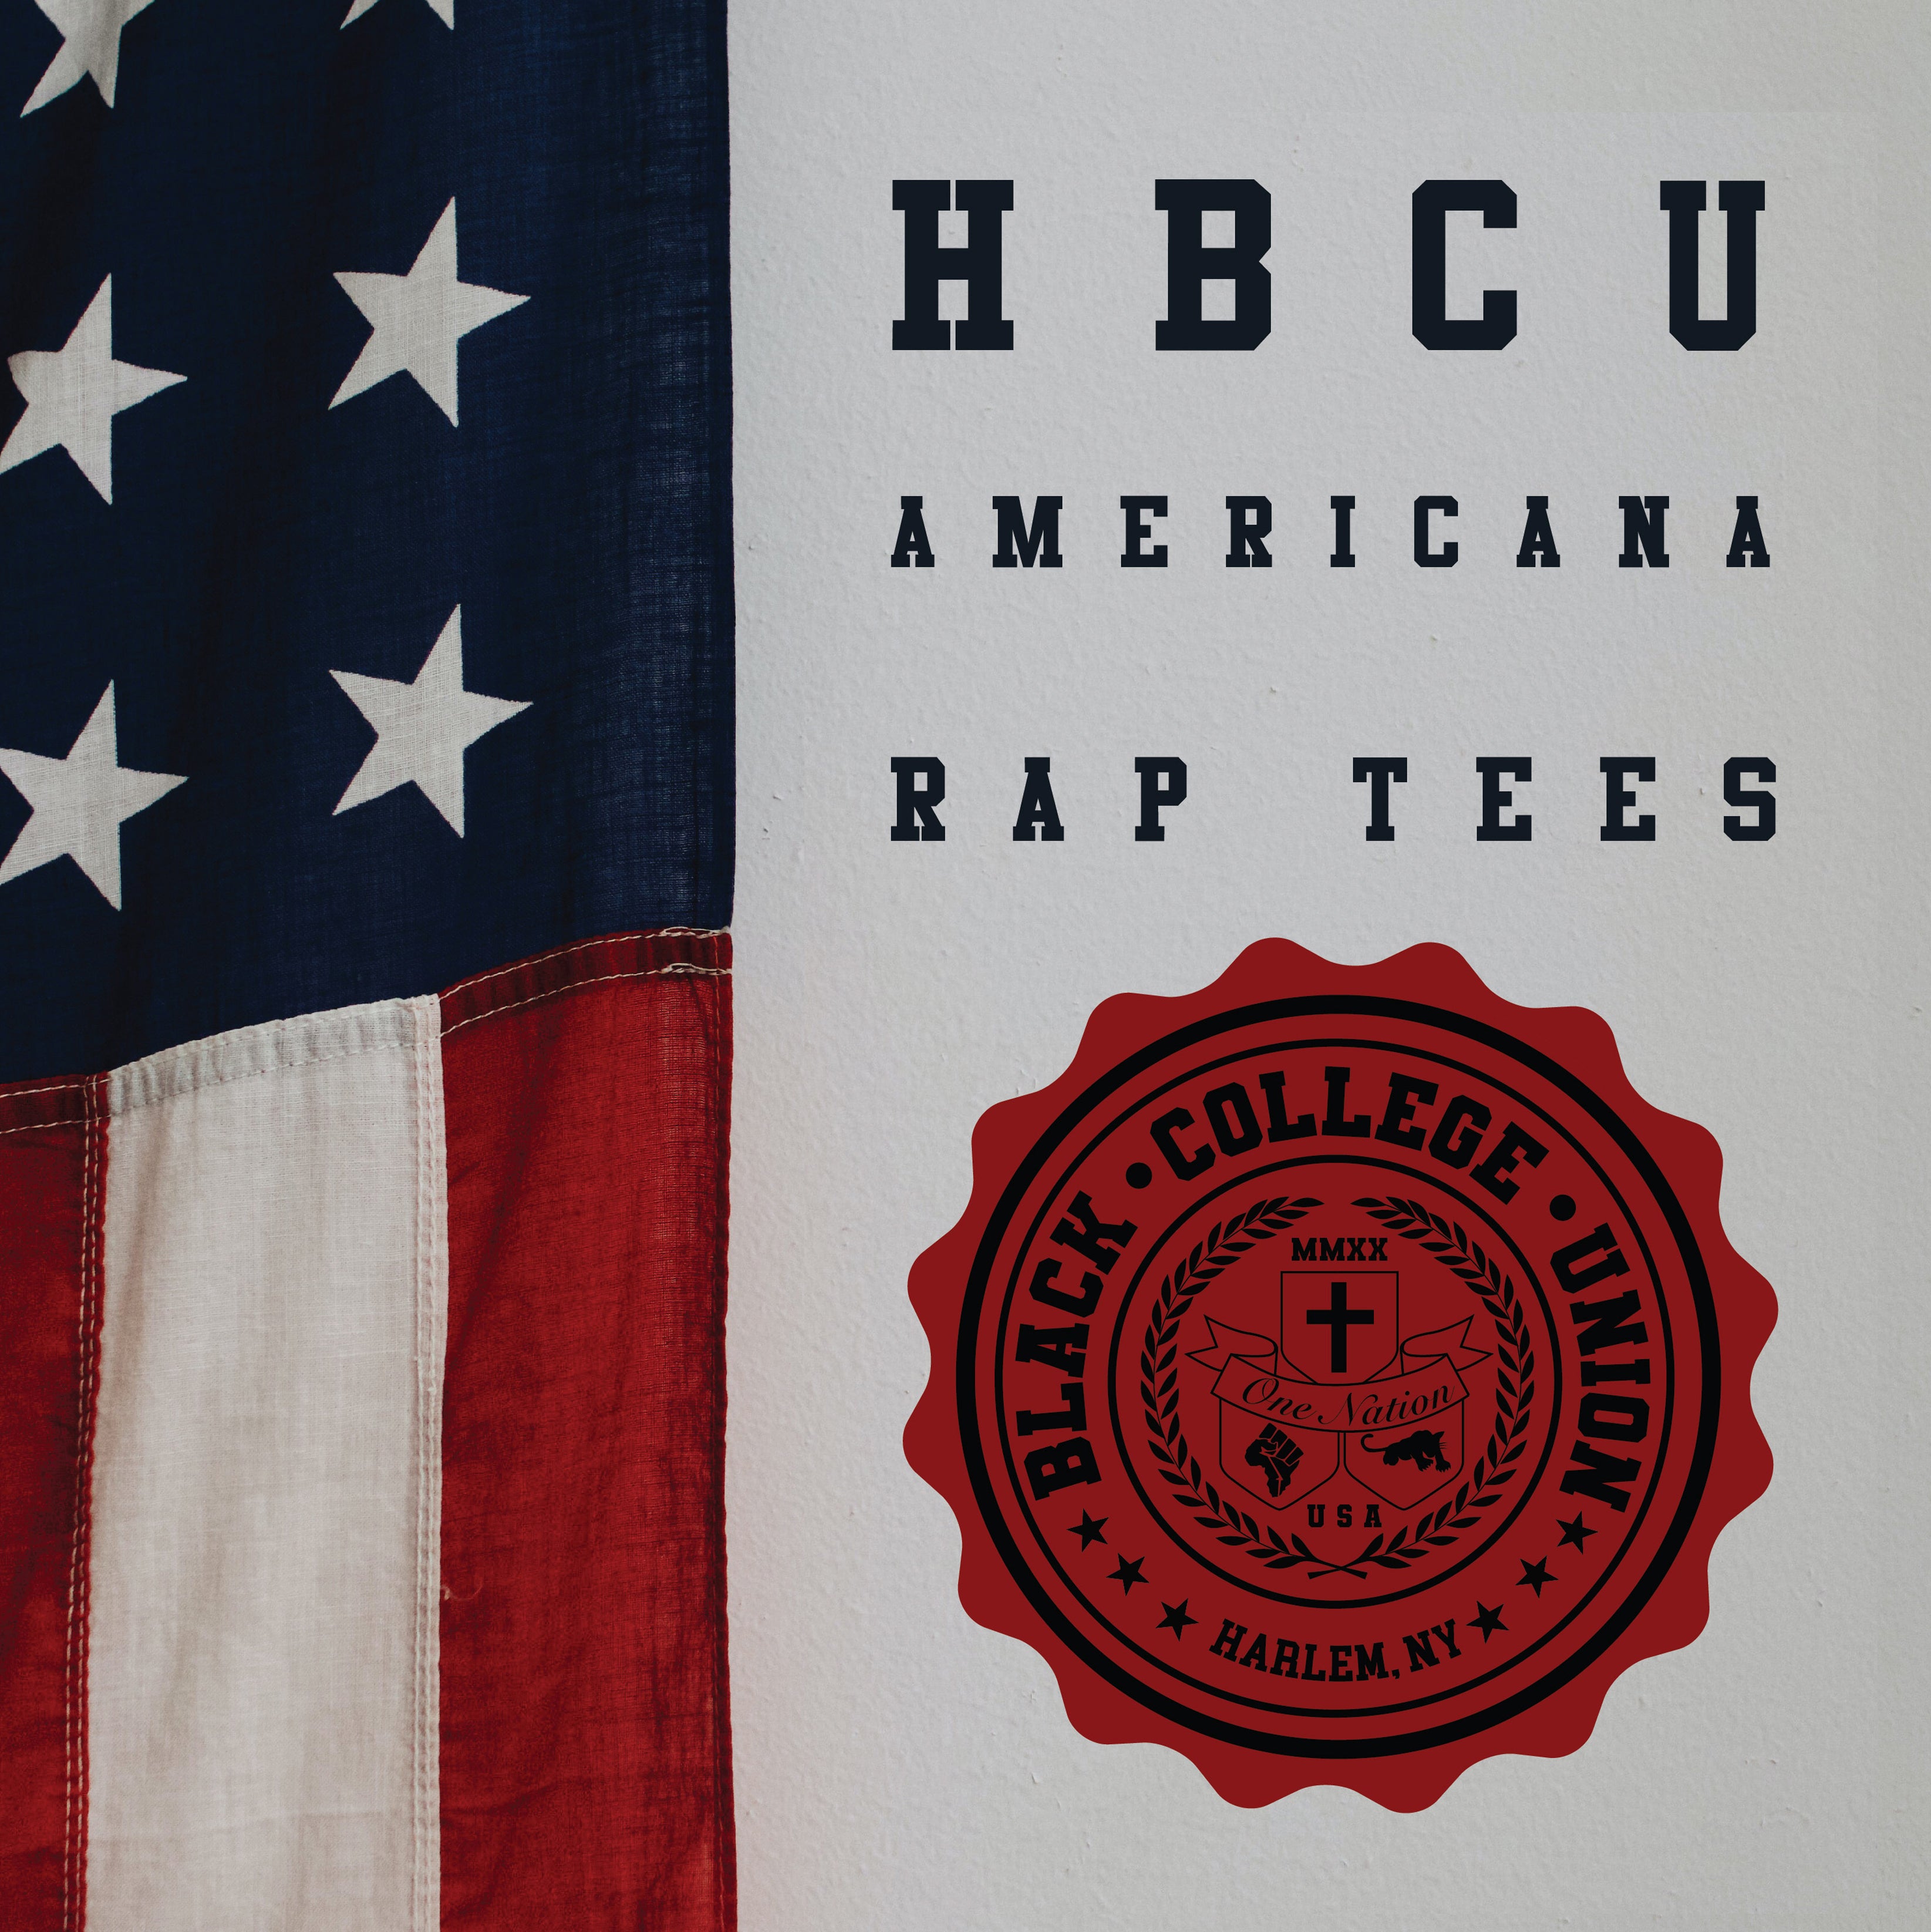 BCU X Champion Original HBCU Americana Rap Tee - Carver